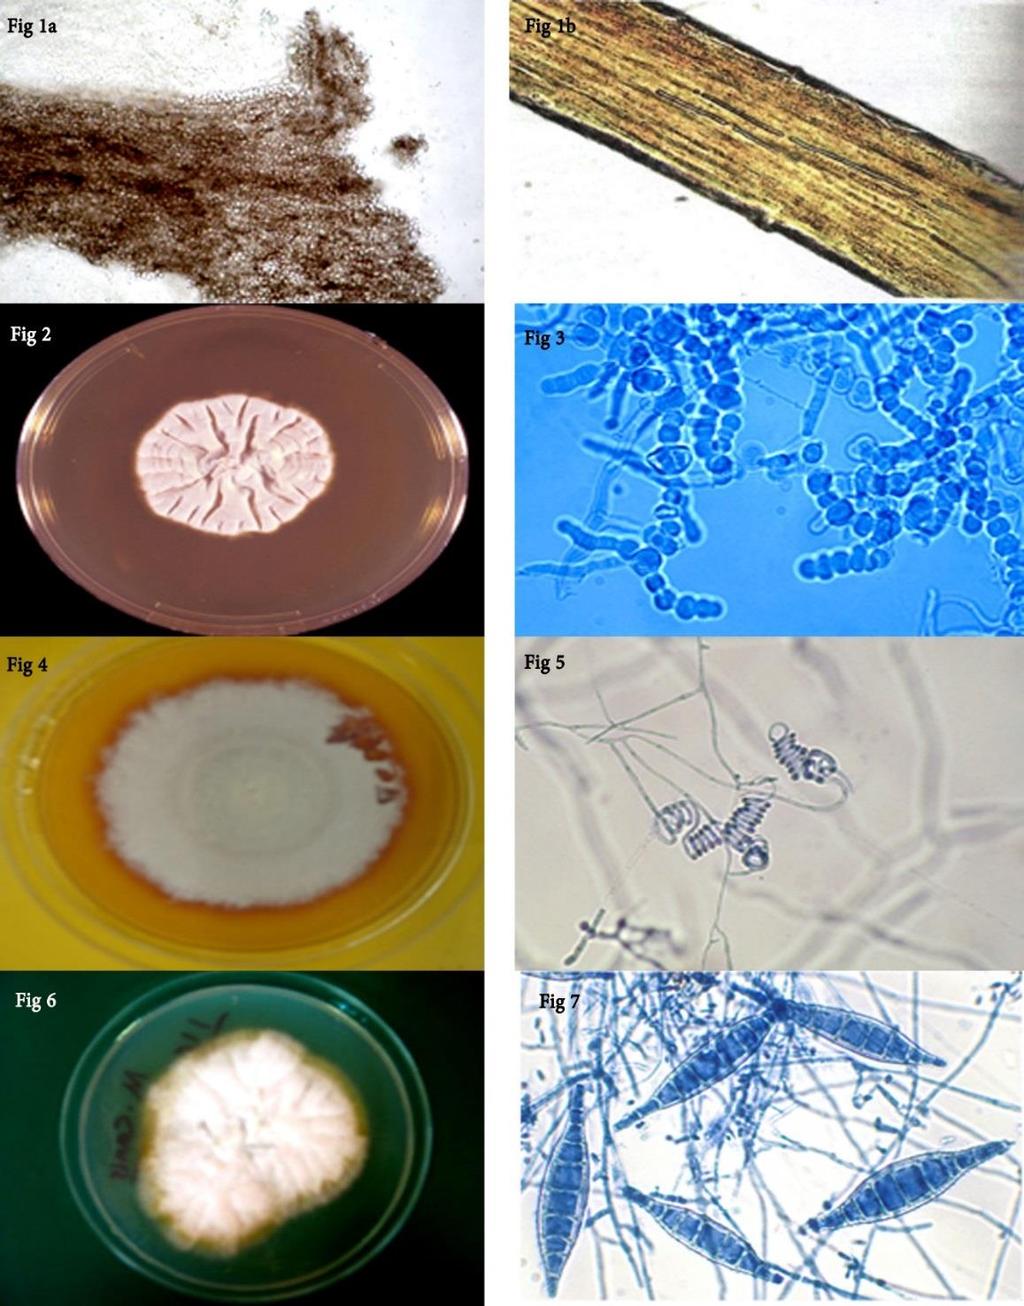 Fig 1a. arthrospores outside the hair (Ectothrix). Fig 1b. arthrospores inside the hair shaft (Endothrix). Fig 2. T.